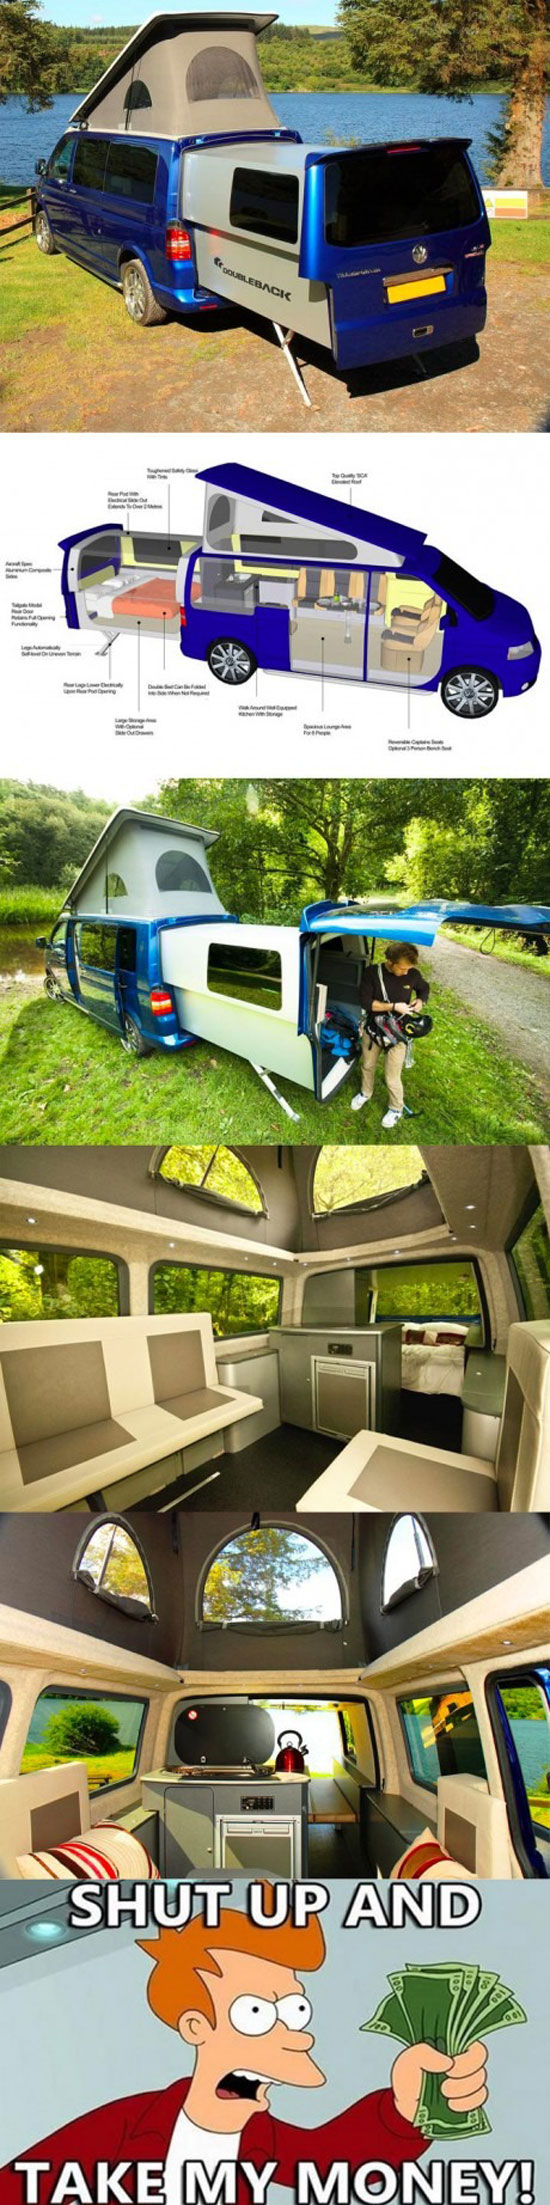 vw campingbus genial